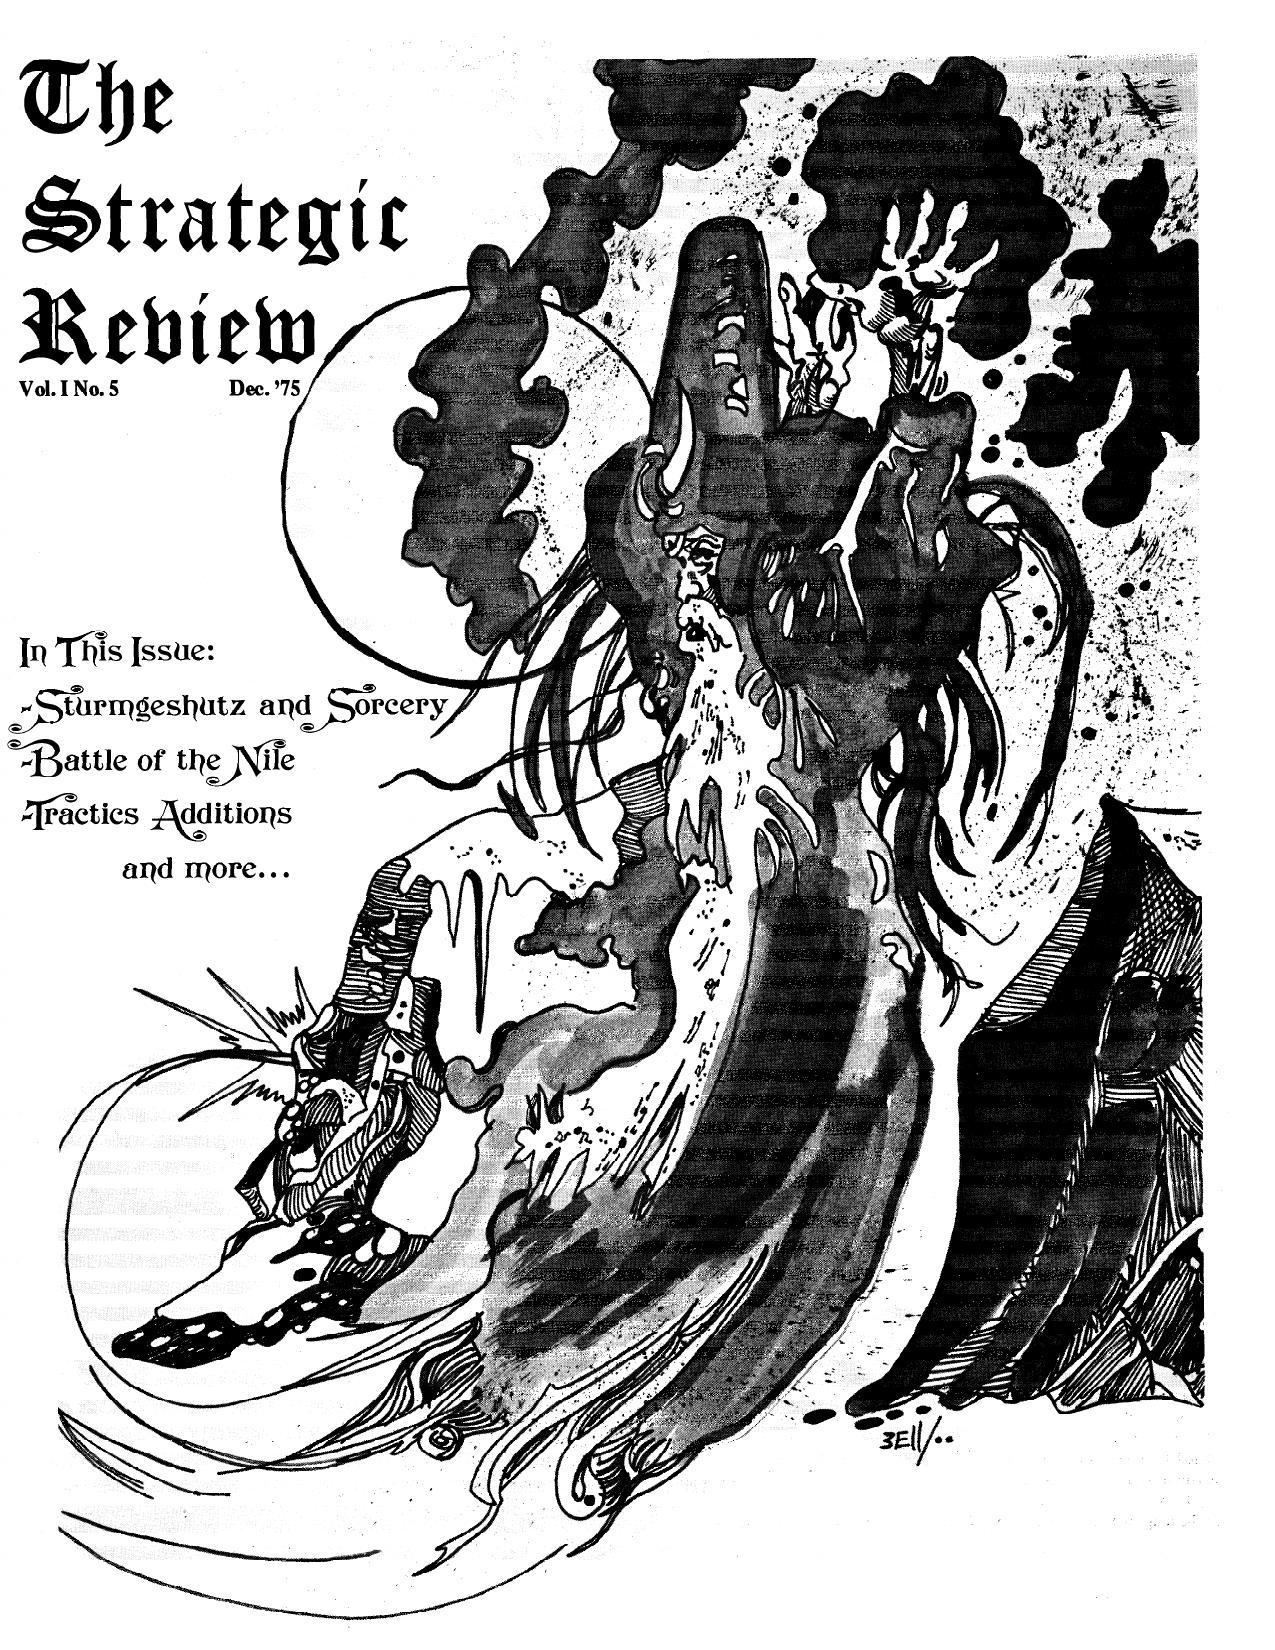 The Strategic Review Vol. 1 No. 5